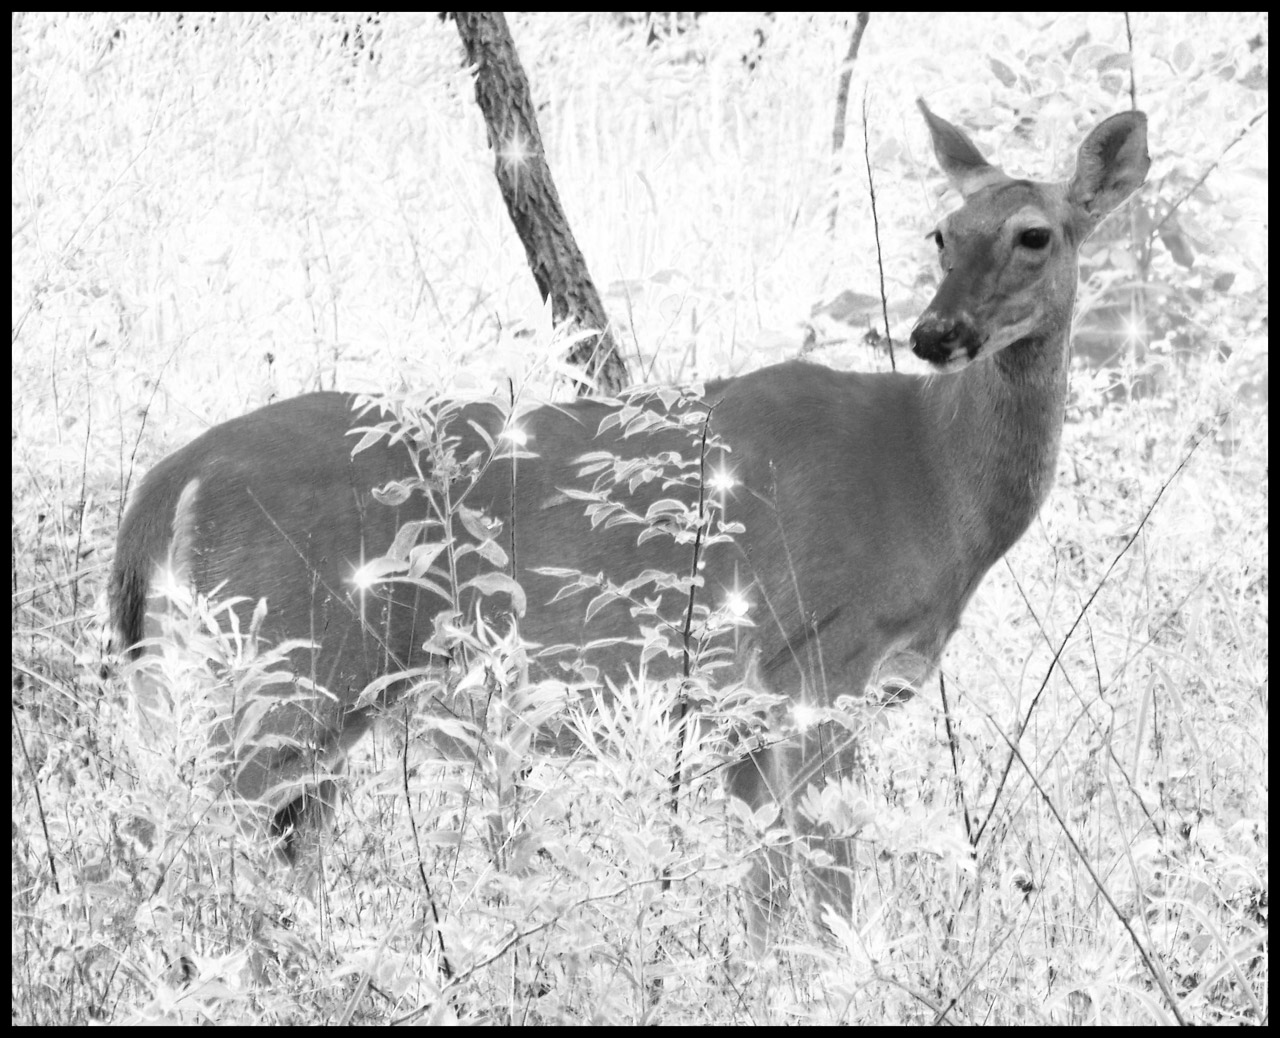 "Deer in Sparklewoods" by David Wagner